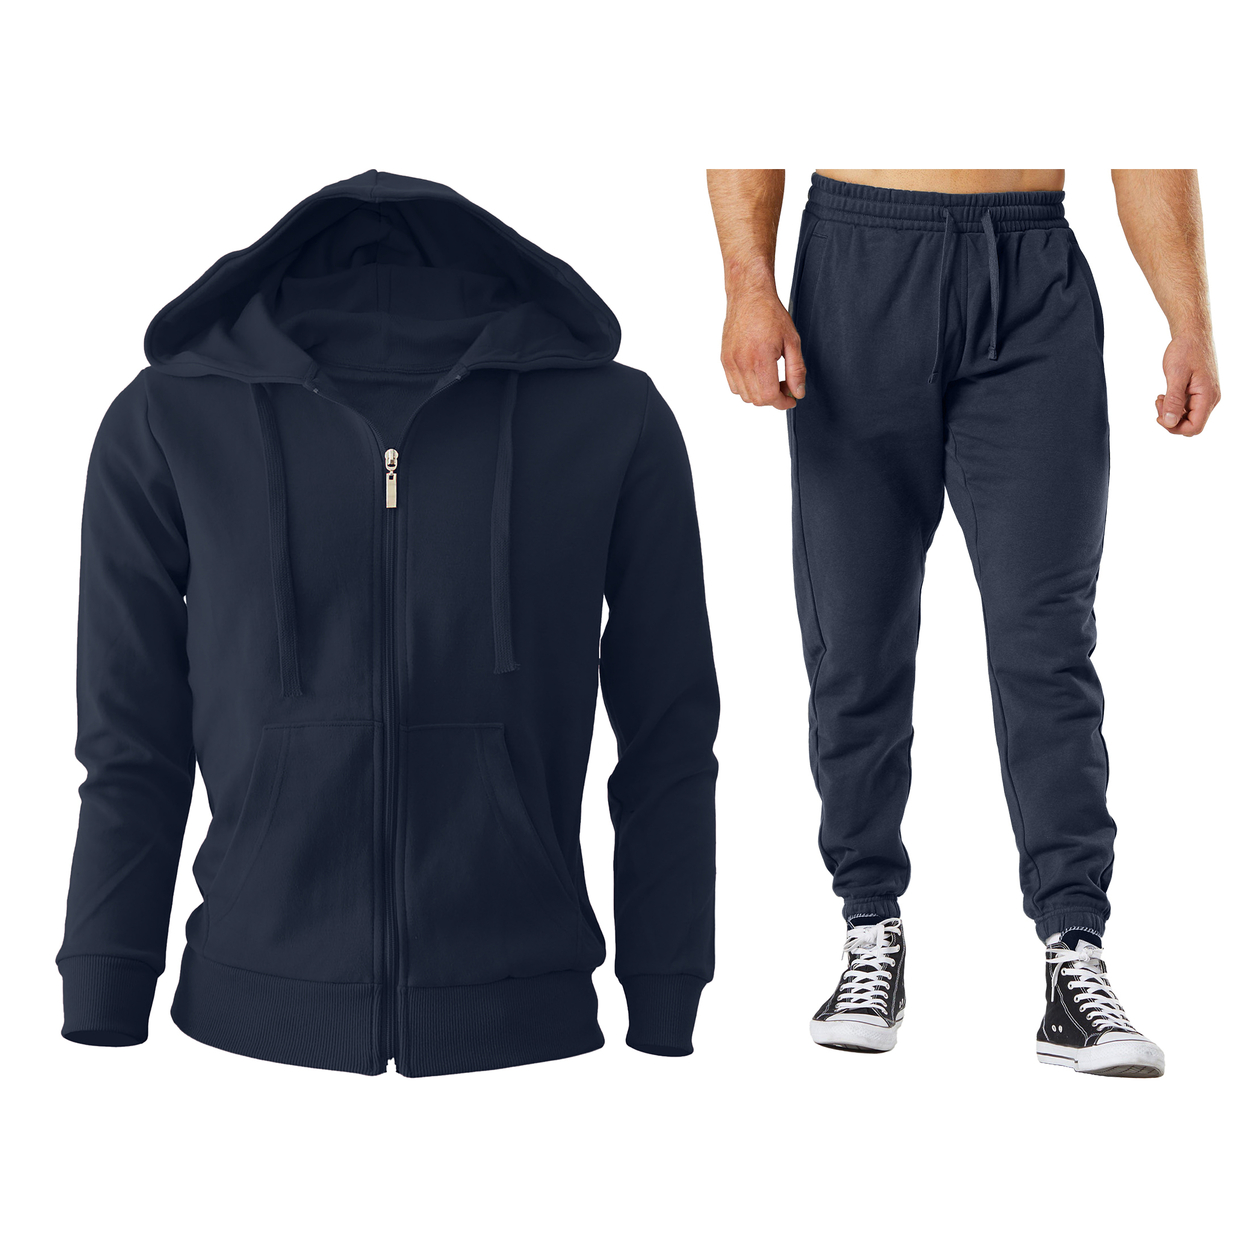 4-Piece: Men's Winter Warm Cozy Athletic Multi-Pockets BIG & TALL Sweatsuit Set - Black, Medium